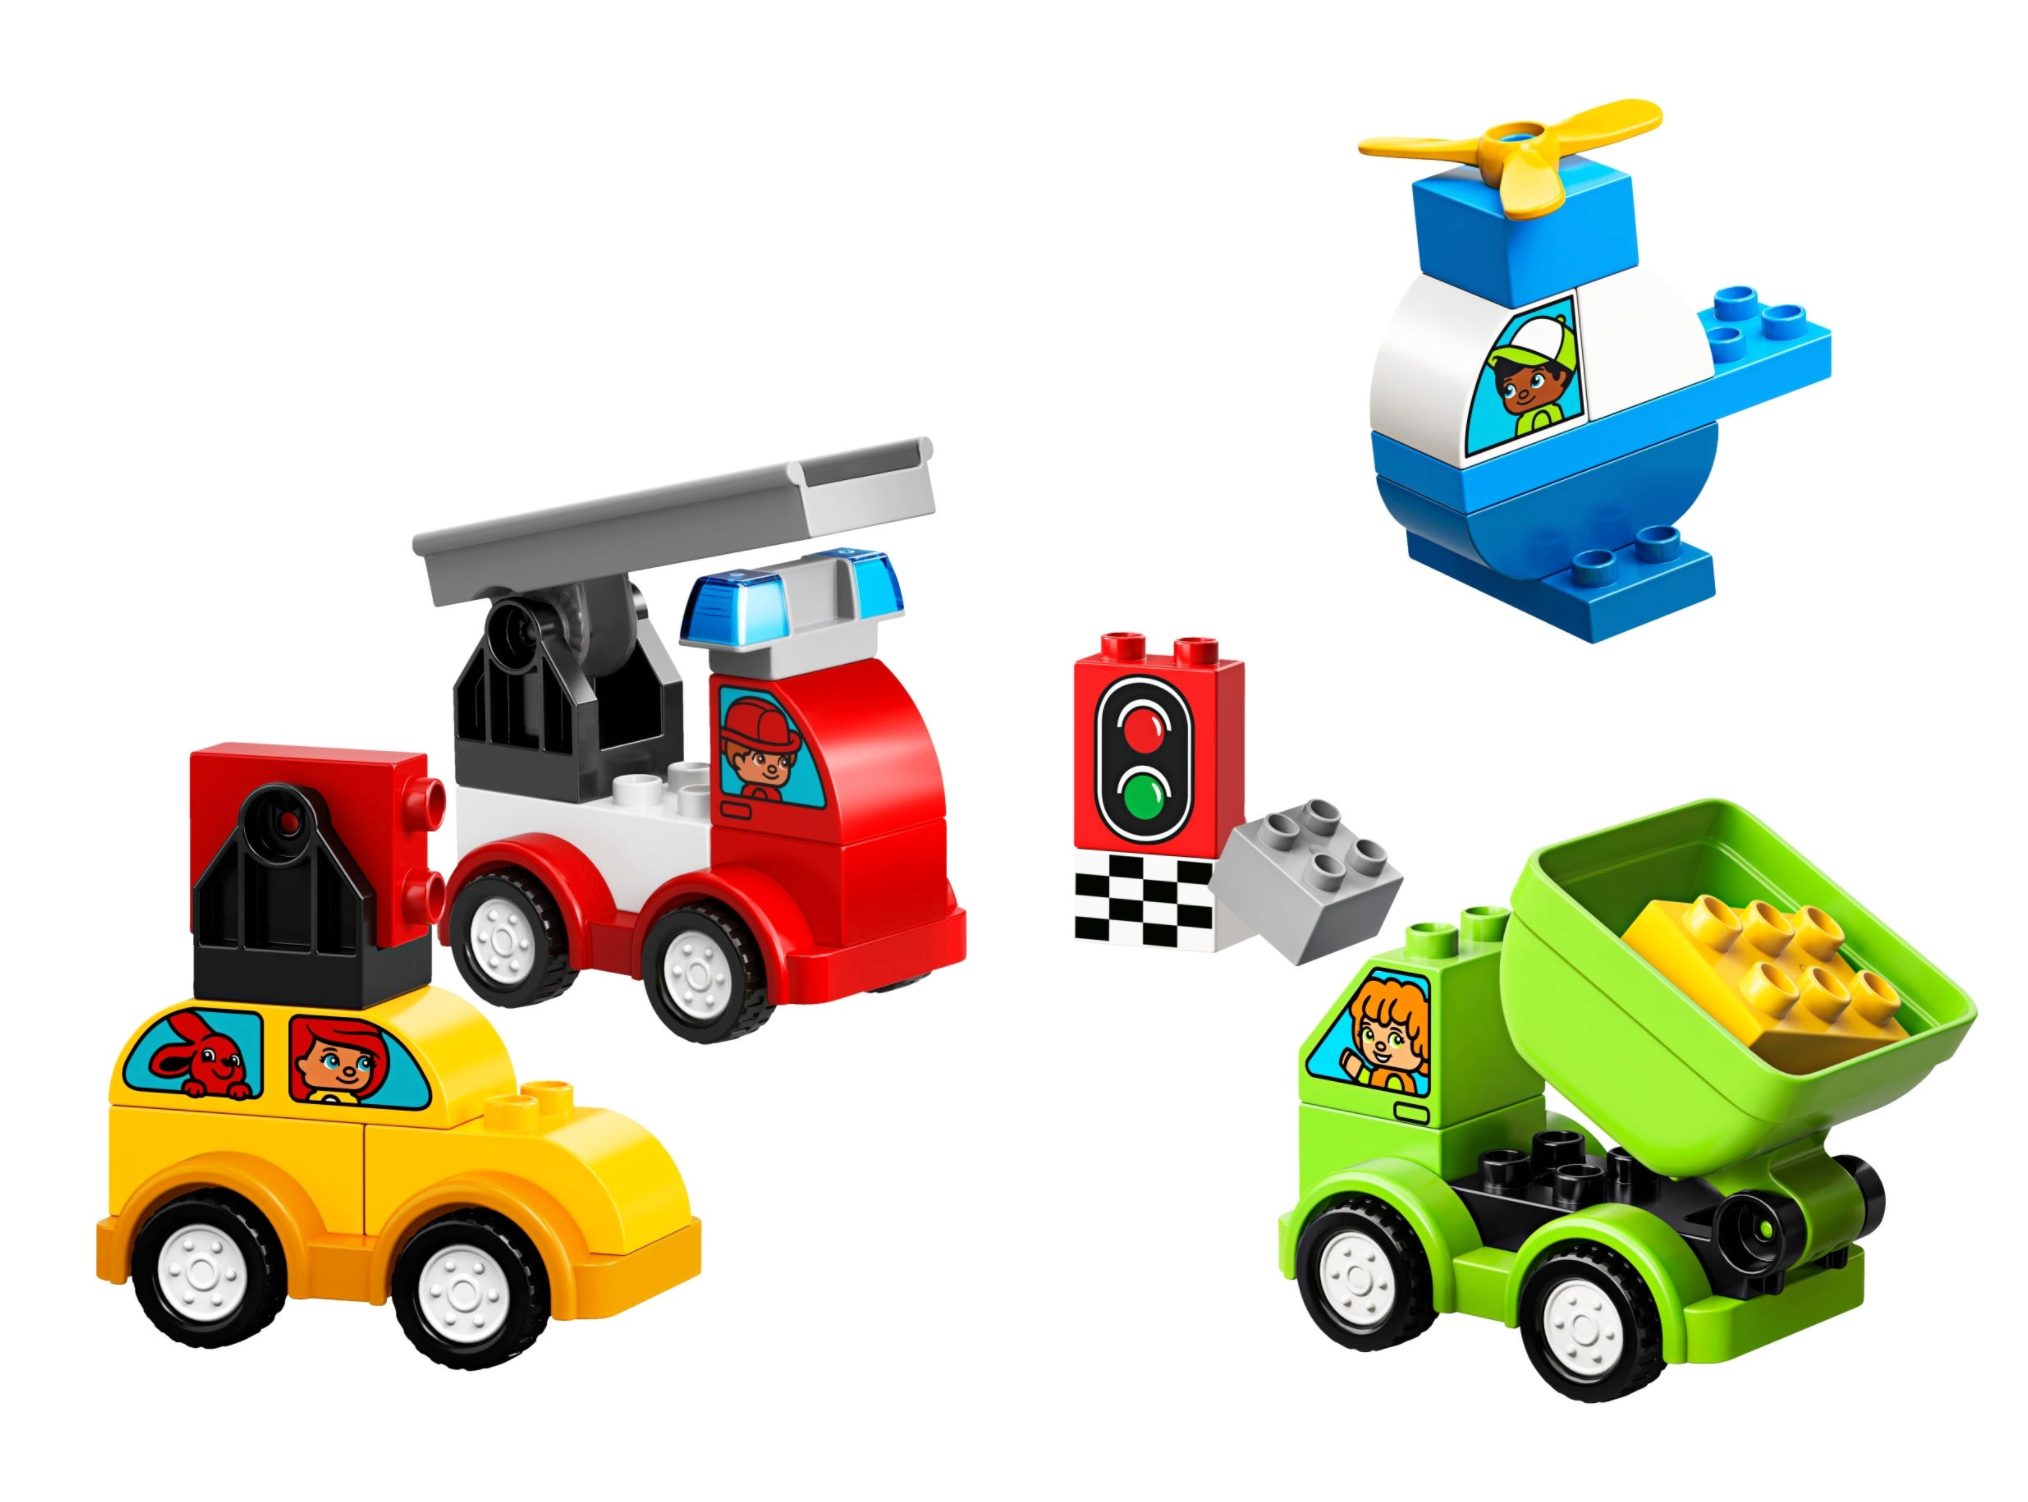 LEGO: DUPLO - My First Car Creations